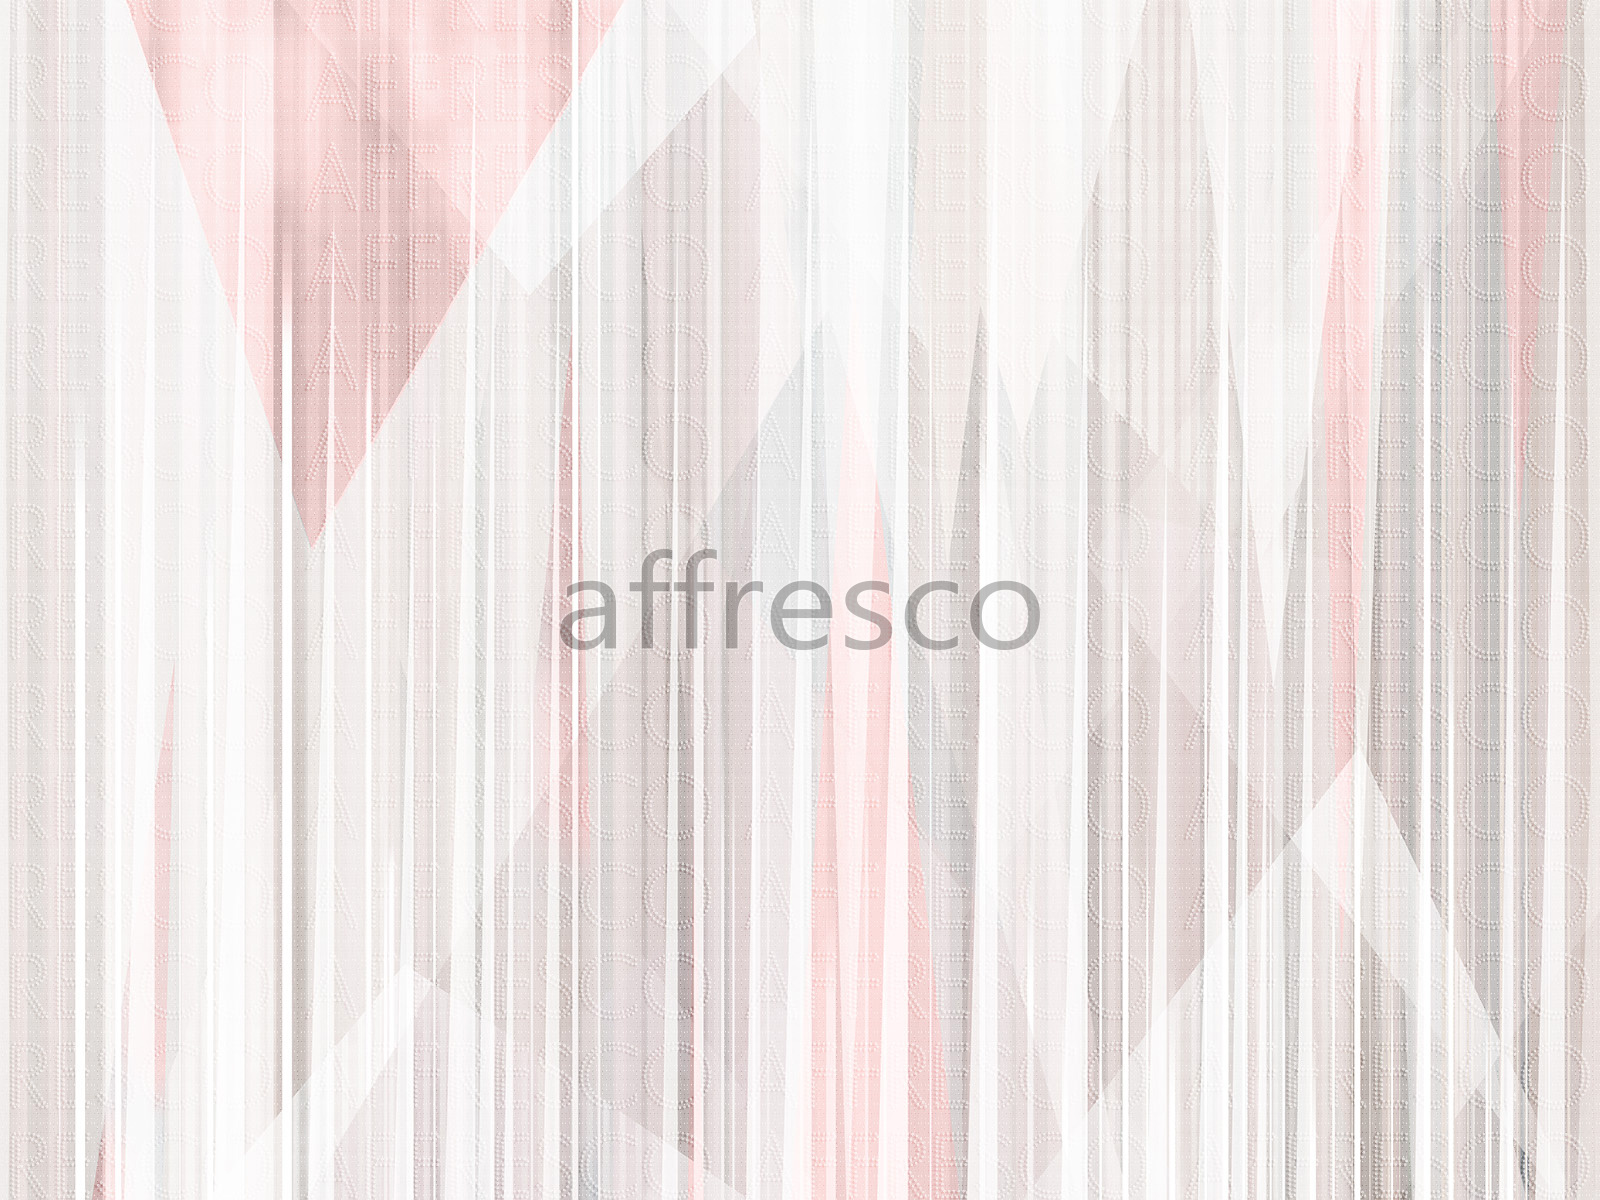 RE930-COL4 | Fine Art | Affresco Factory